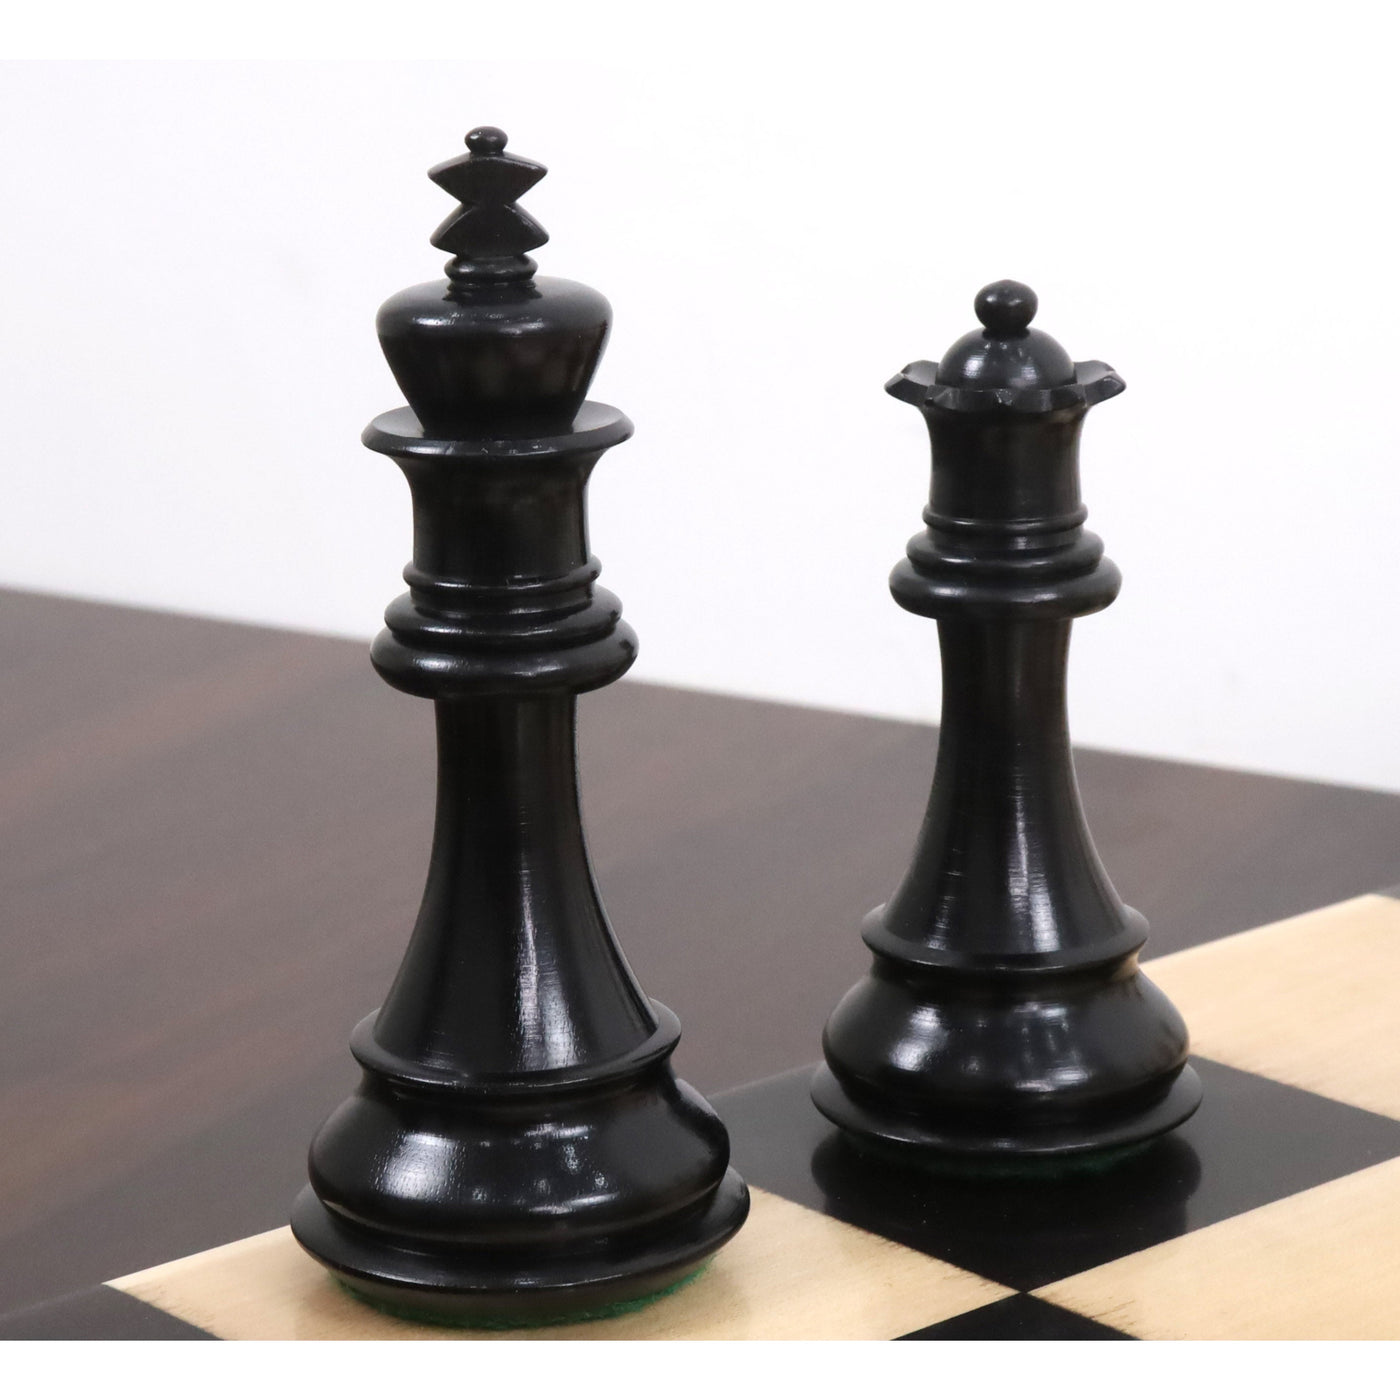 4" Bridle Staunton Luxury Chess Set - Chess Pieces Only - Ebony Wood & Boxwood